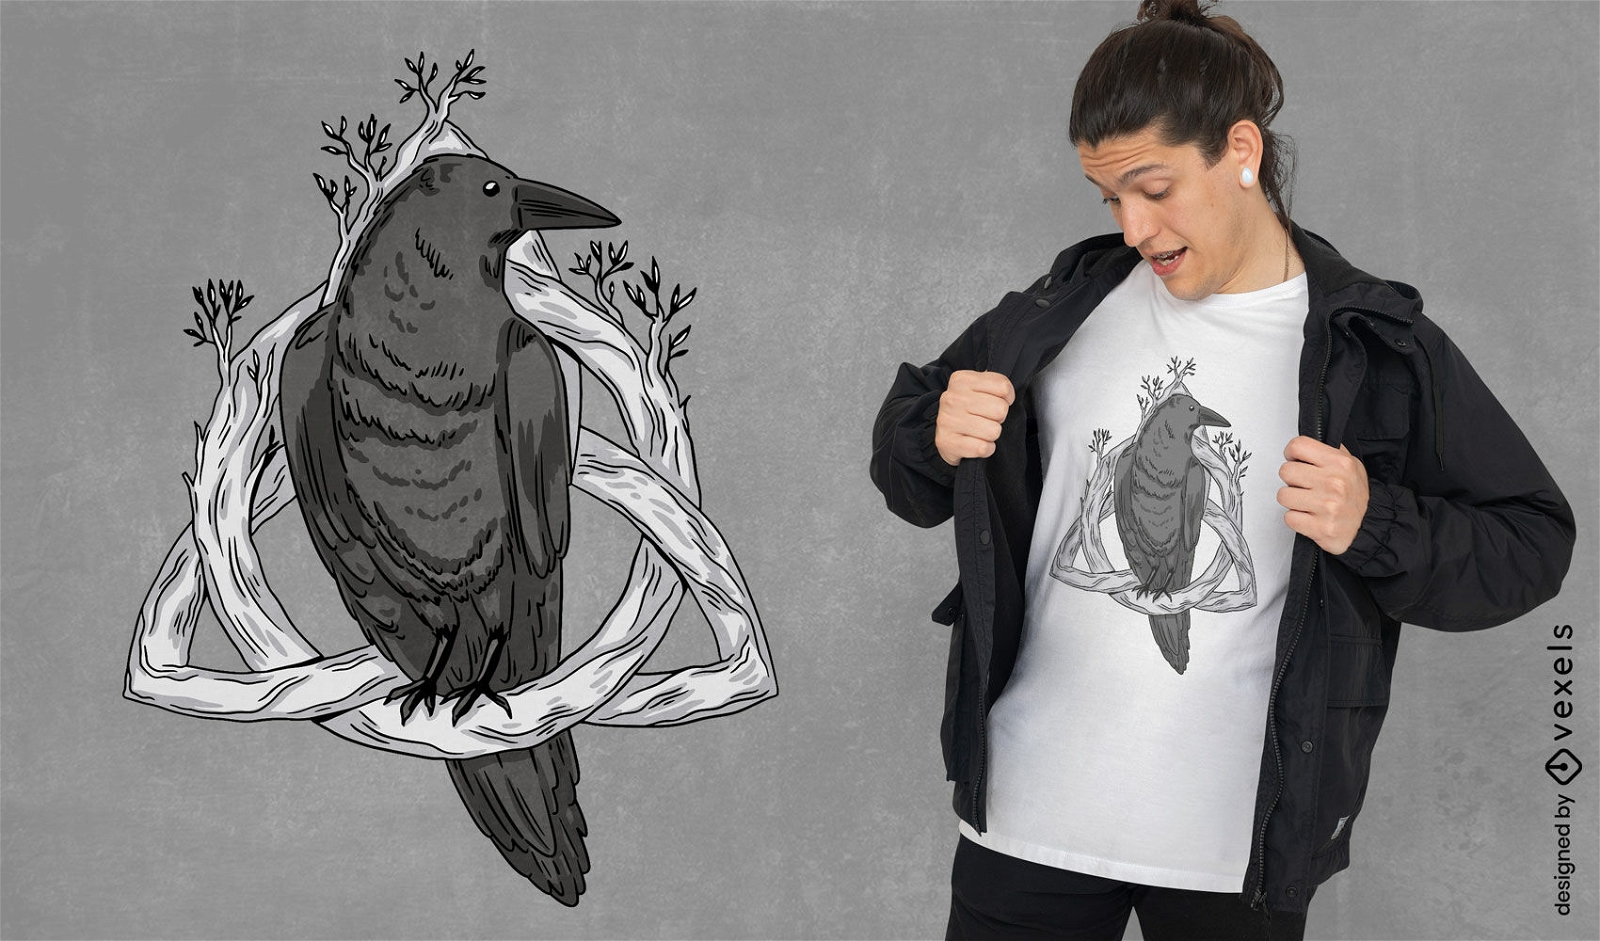 Raven no design de camiseta de s?mbolo n?rdico